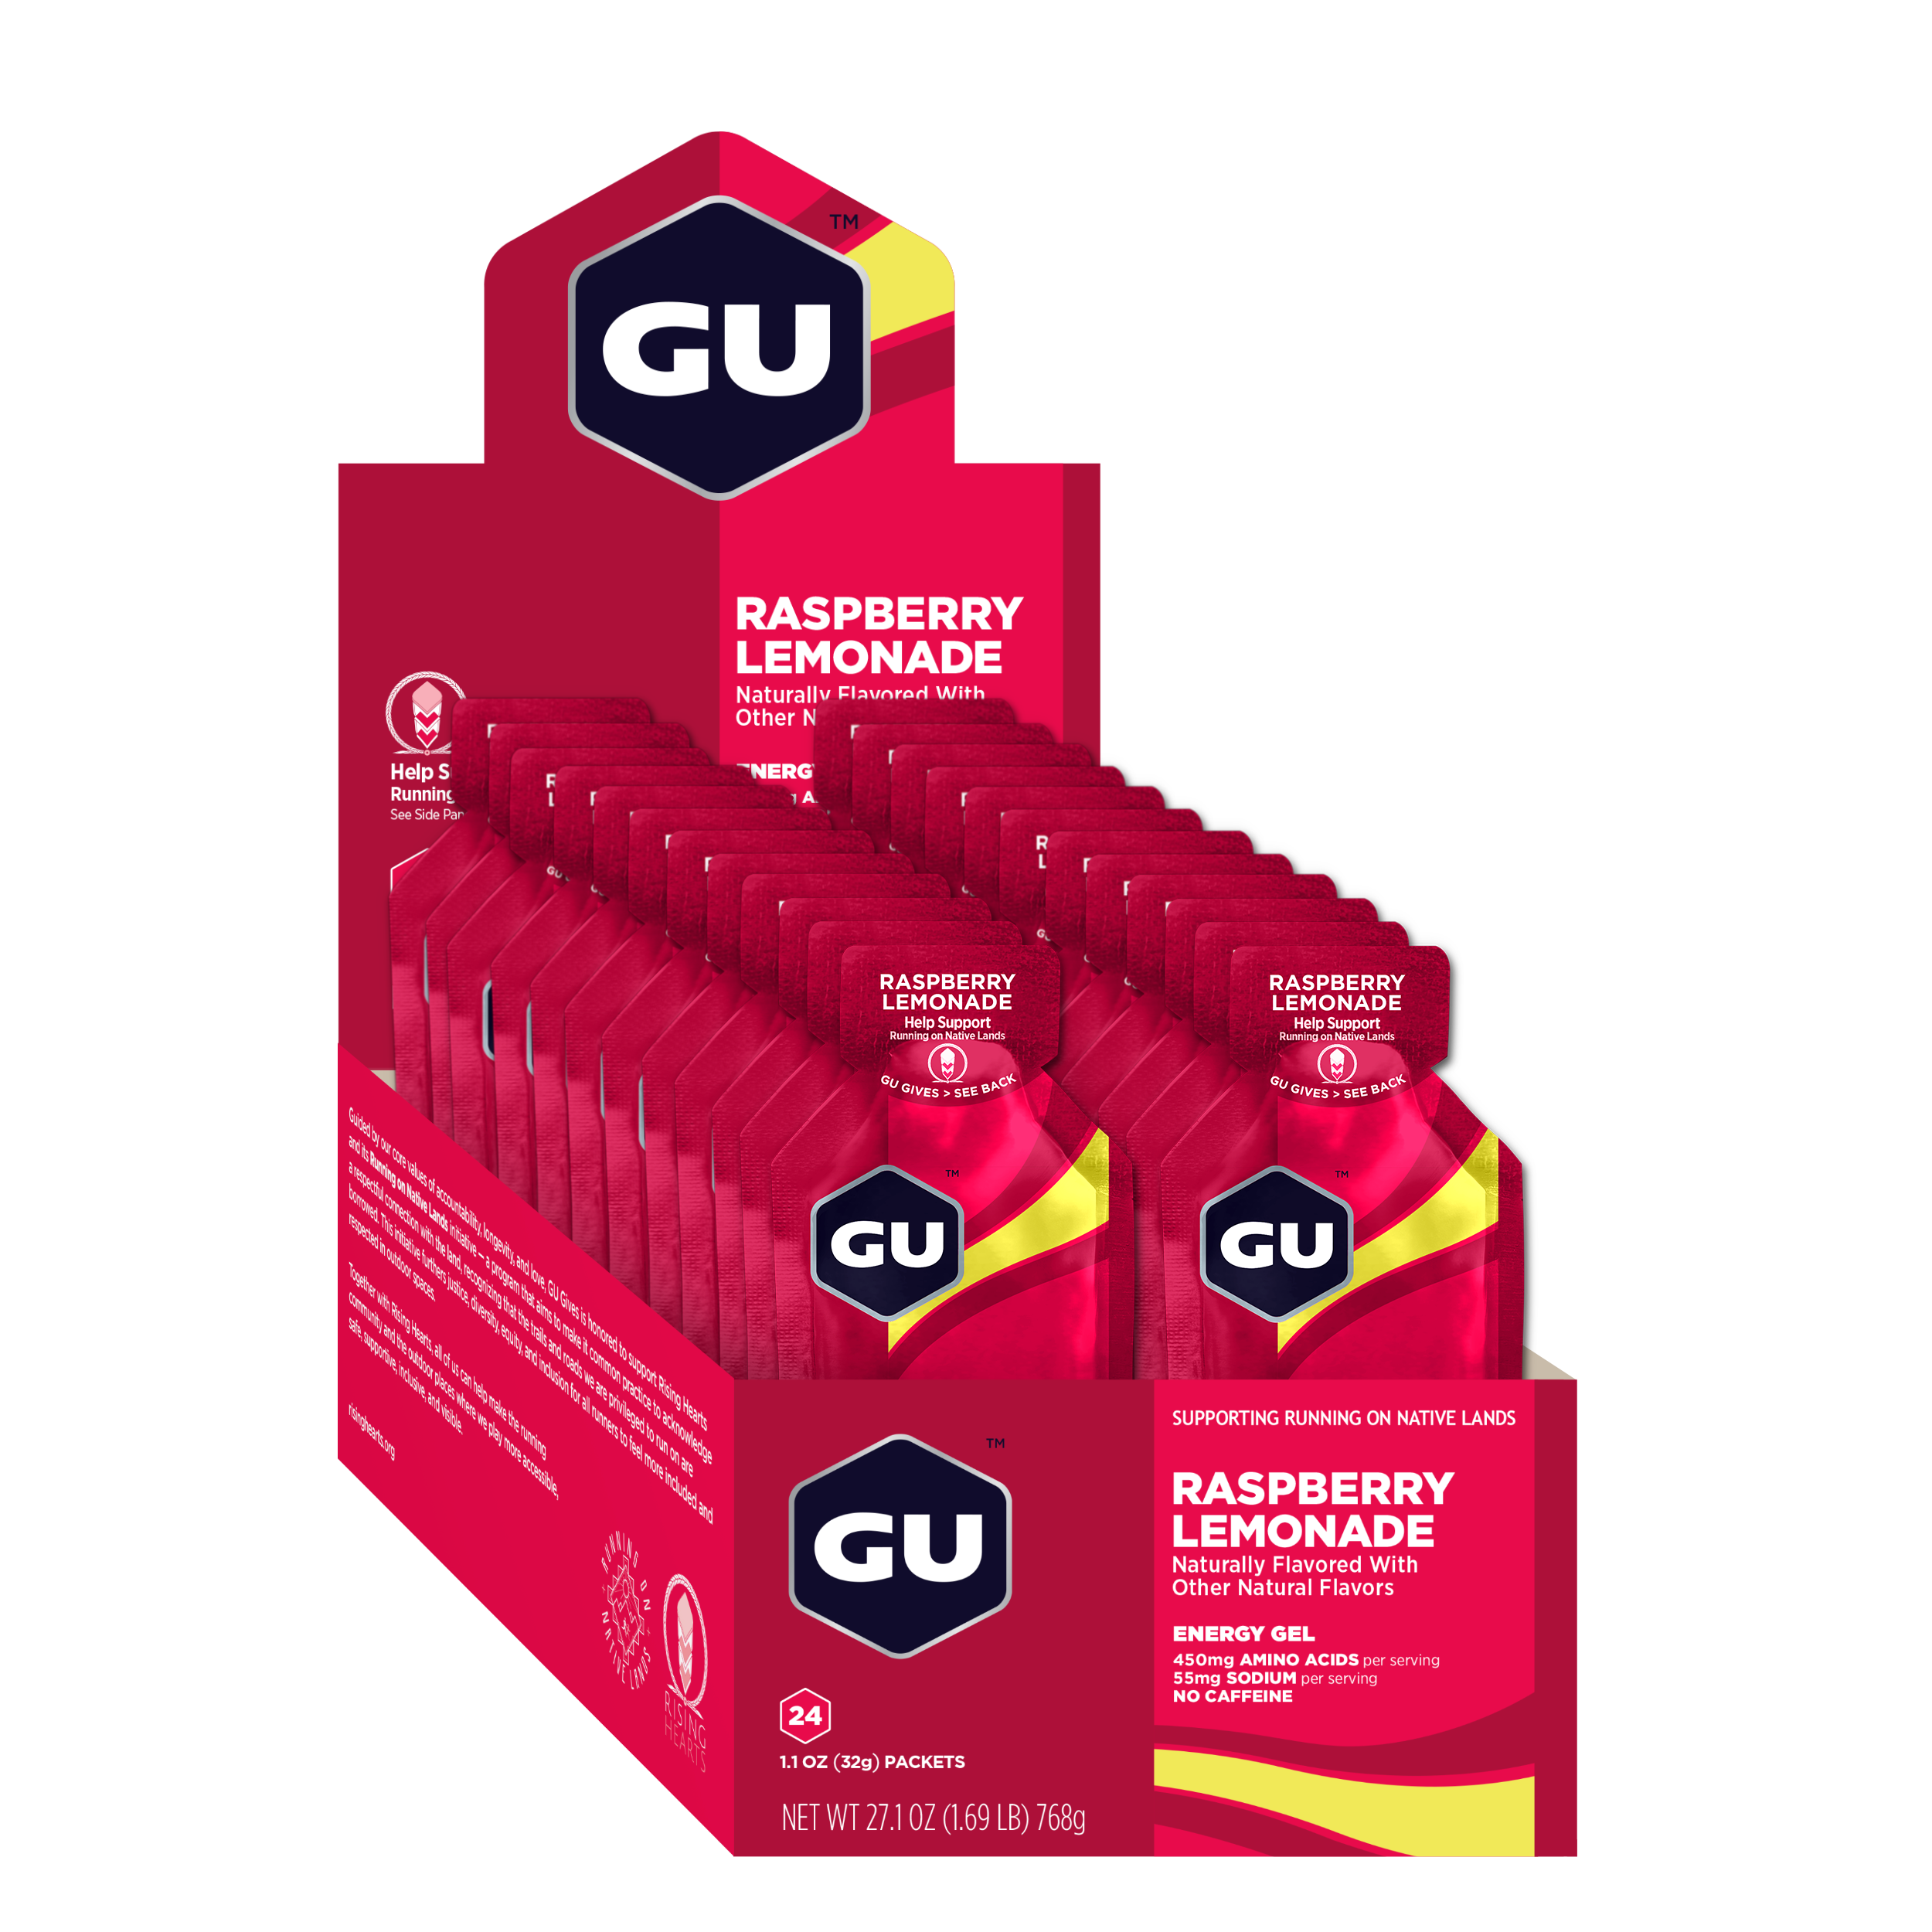 GU Energy Energigel Raspberry Lemonade (24 x 32g)